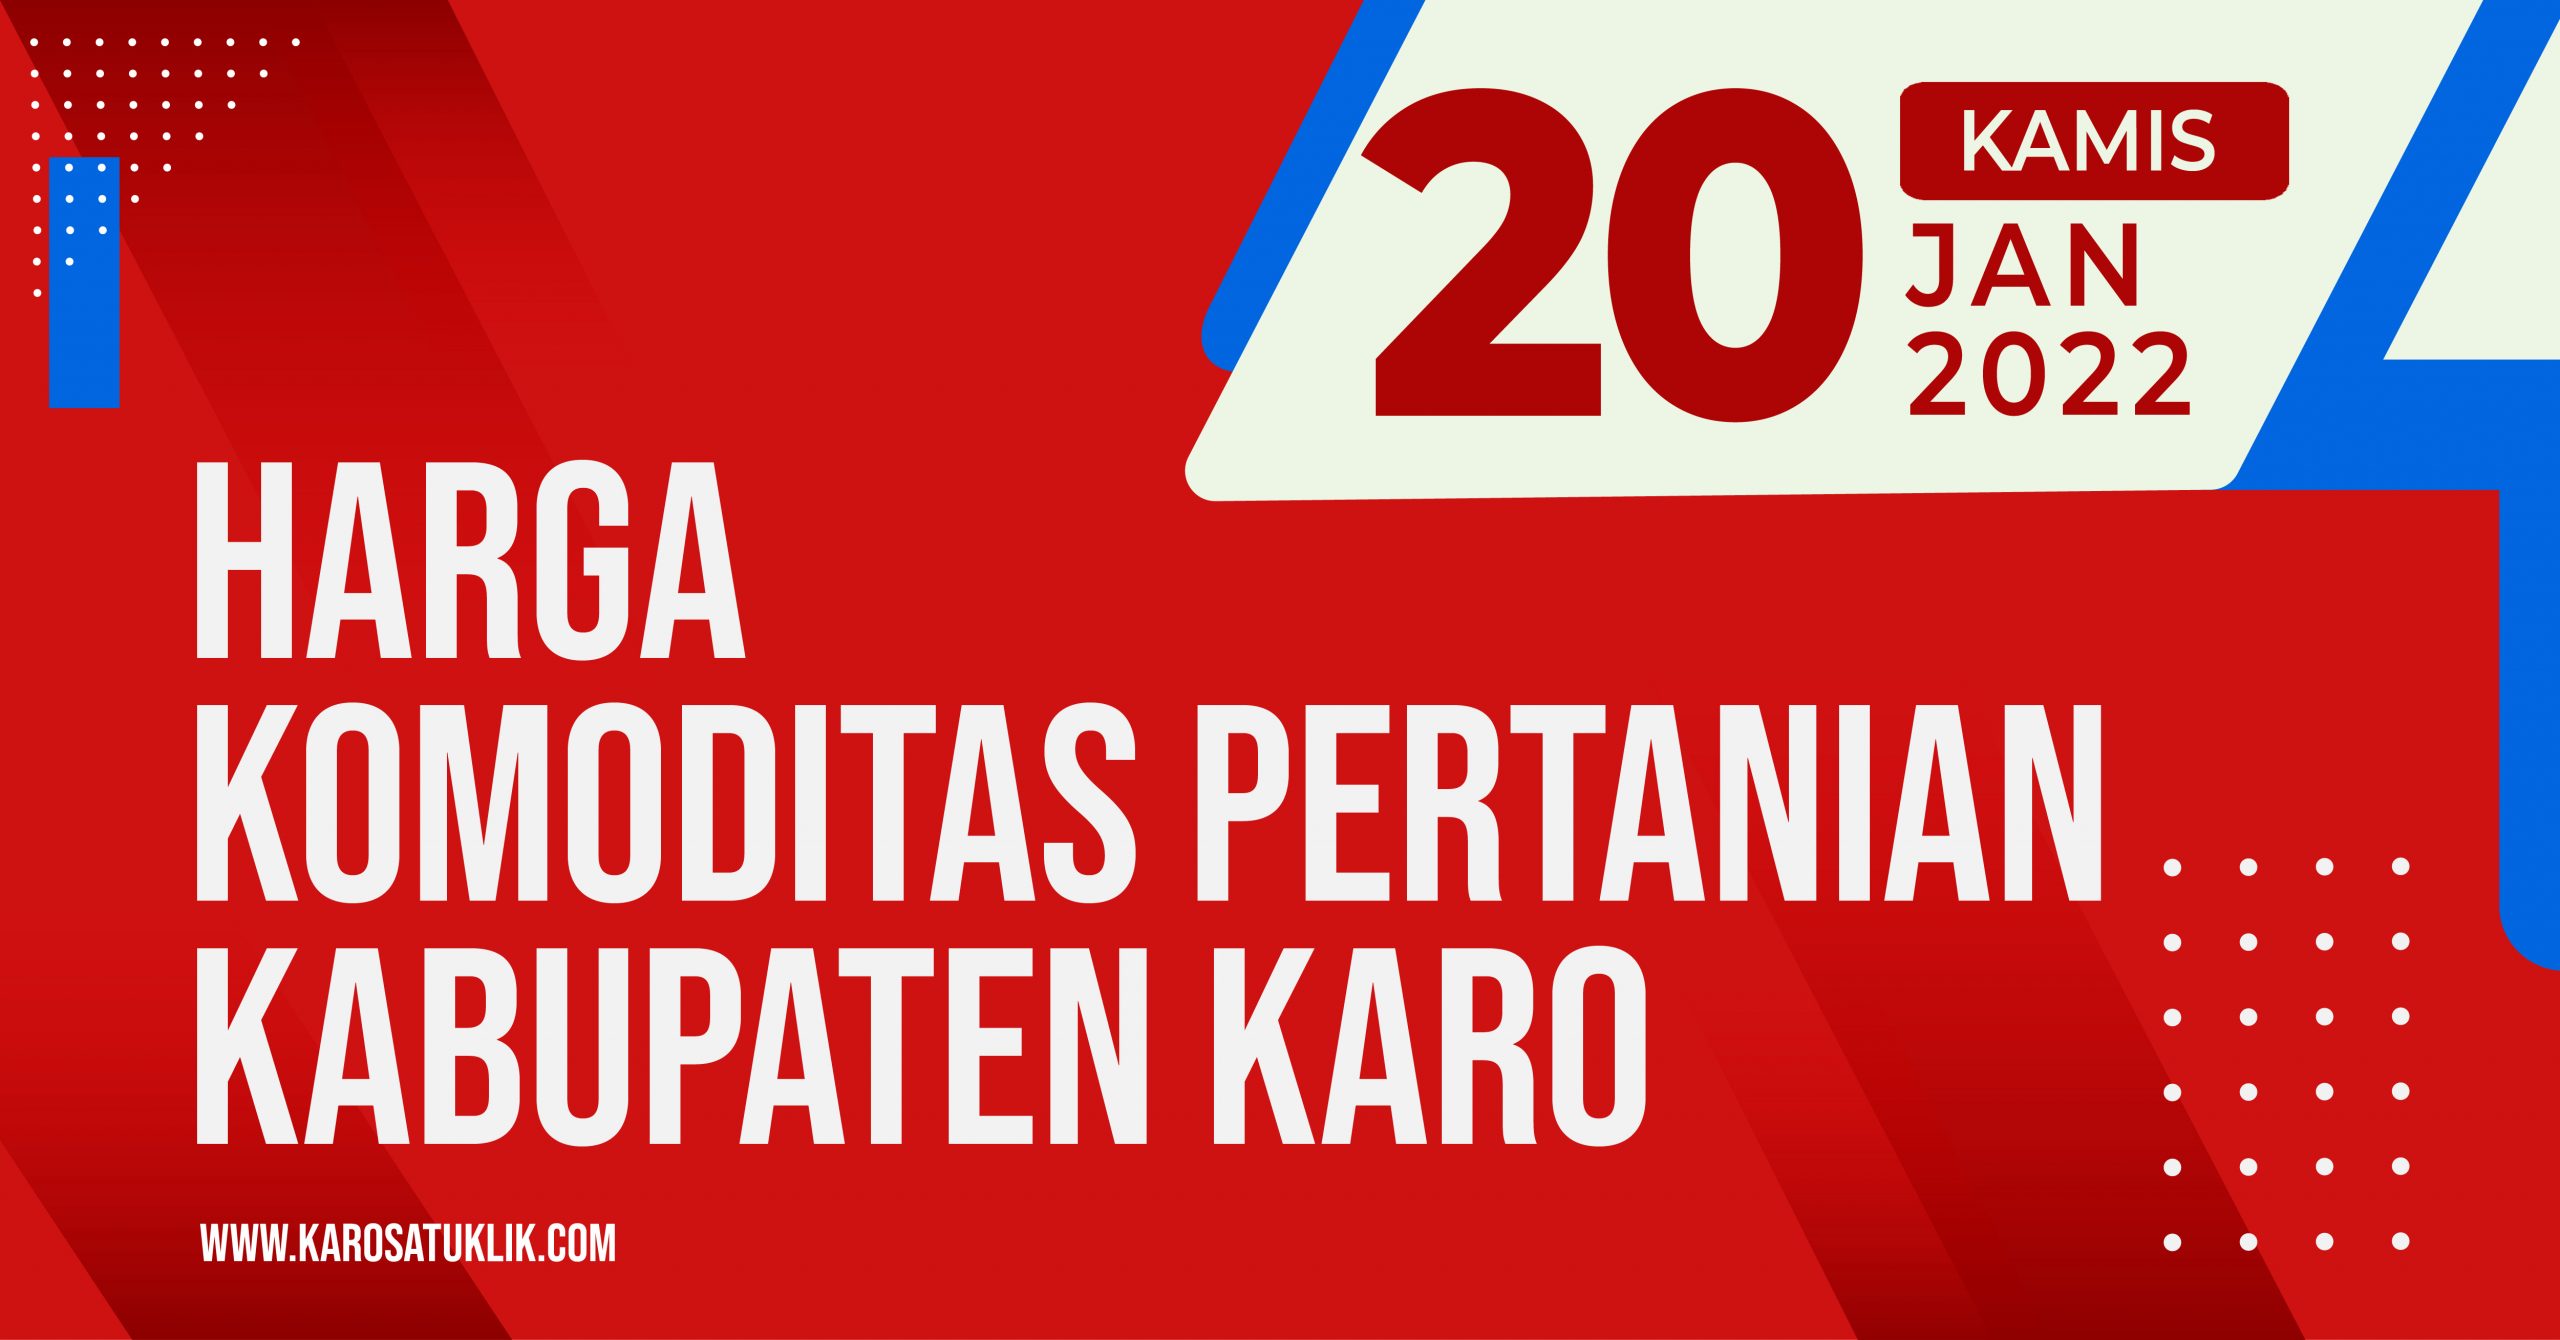 Daftar Harga Komoditas Pertanian Kabupaten Karo, 20 Januari 2022